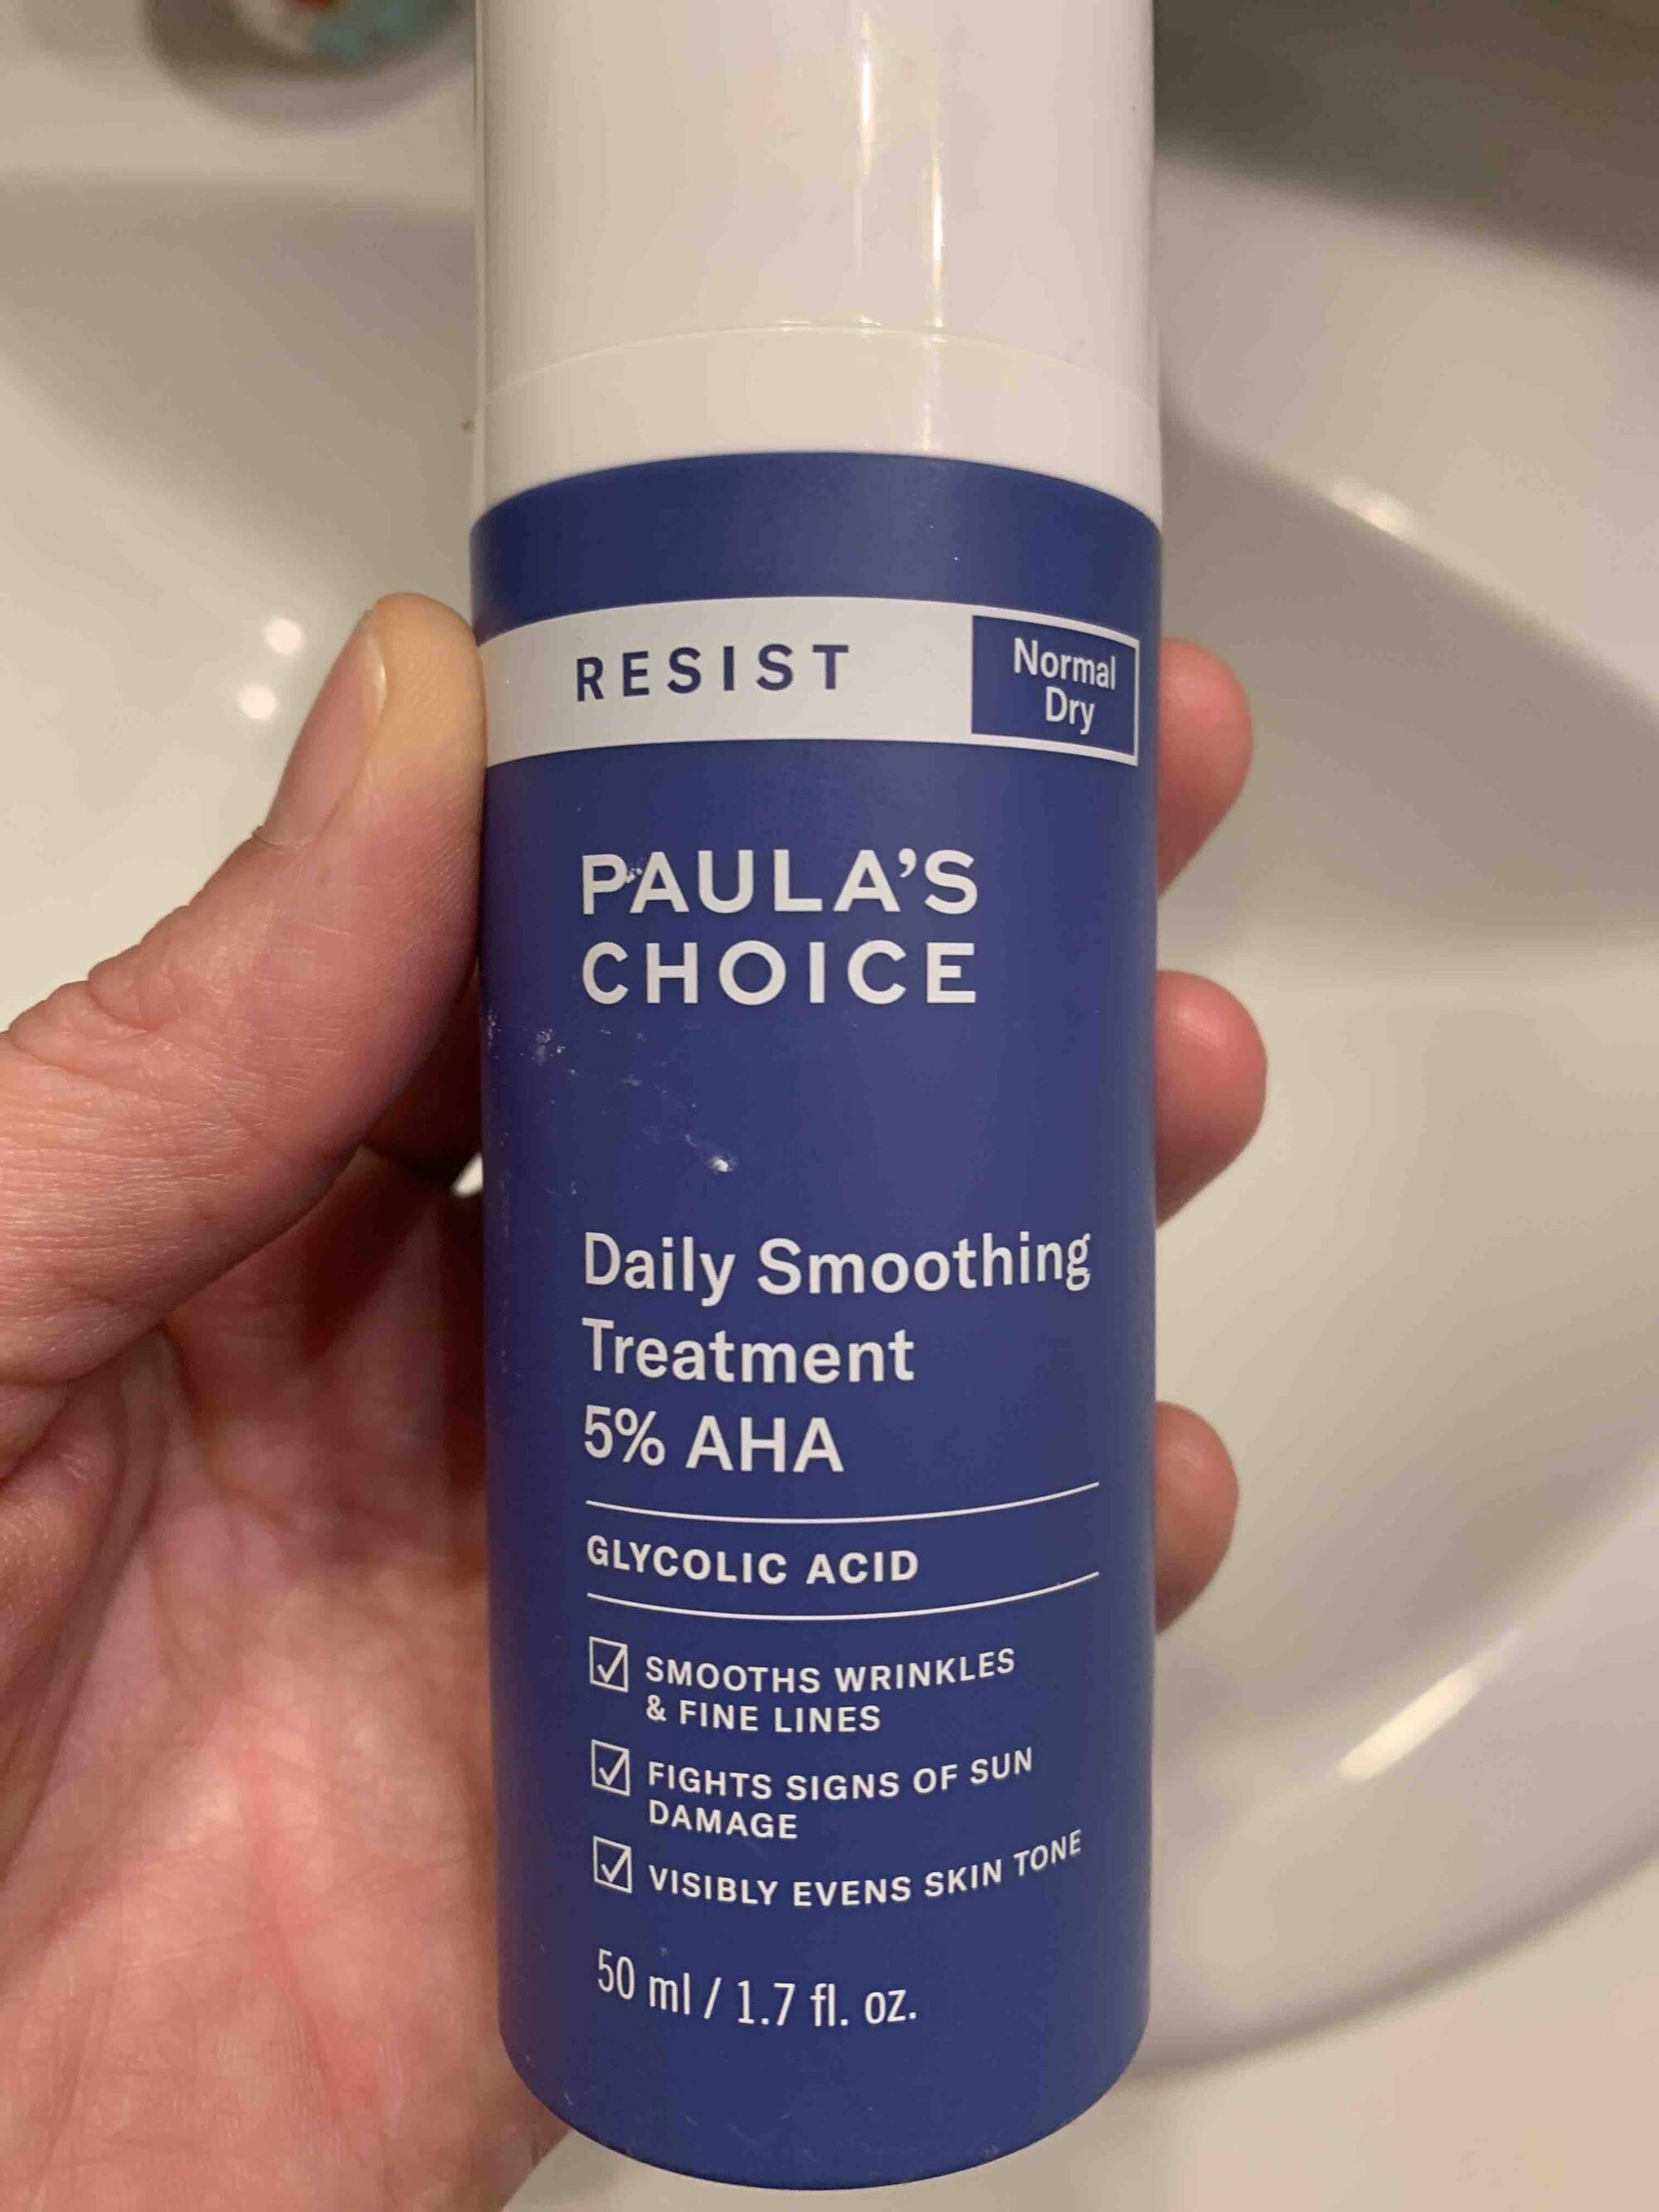 PAULA'S CHOICE - Daily smoothing treatment 5% aha